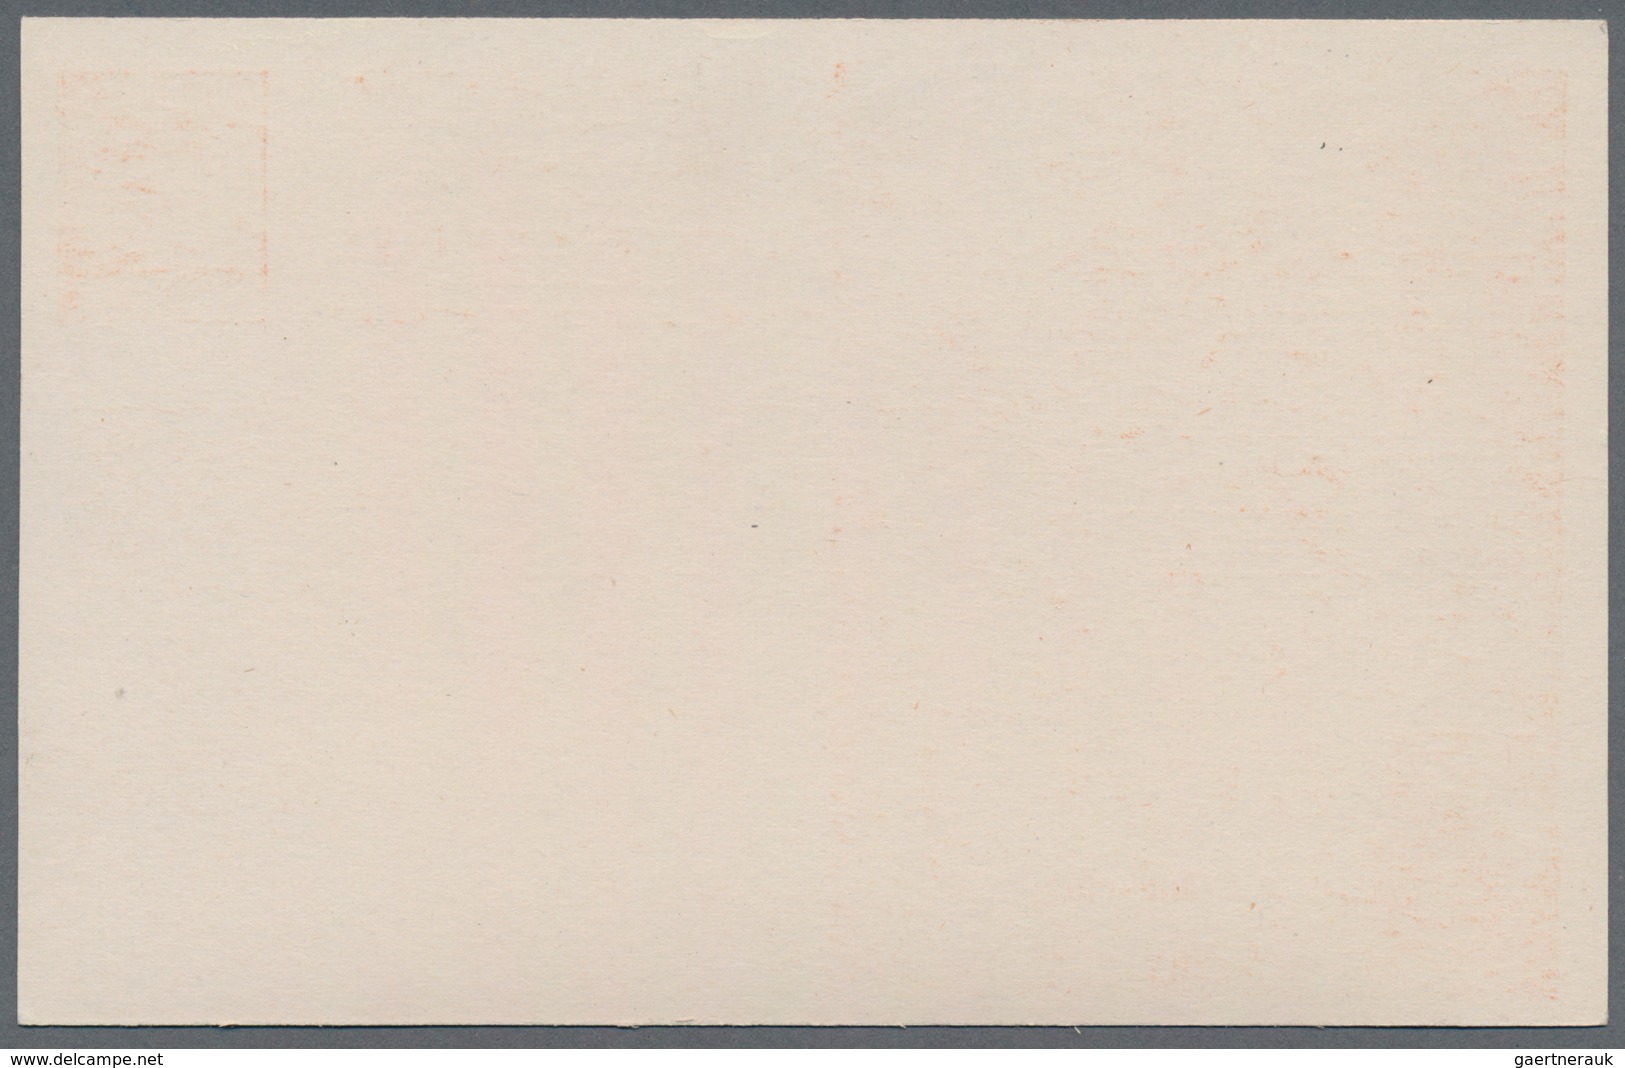 Südaustralien: 1908, QV 1d Pictorial Stat. Postcard (Adelaide Ptg.) In Orange With View 'SAVINGS BAN - Briefe U. Dokumente